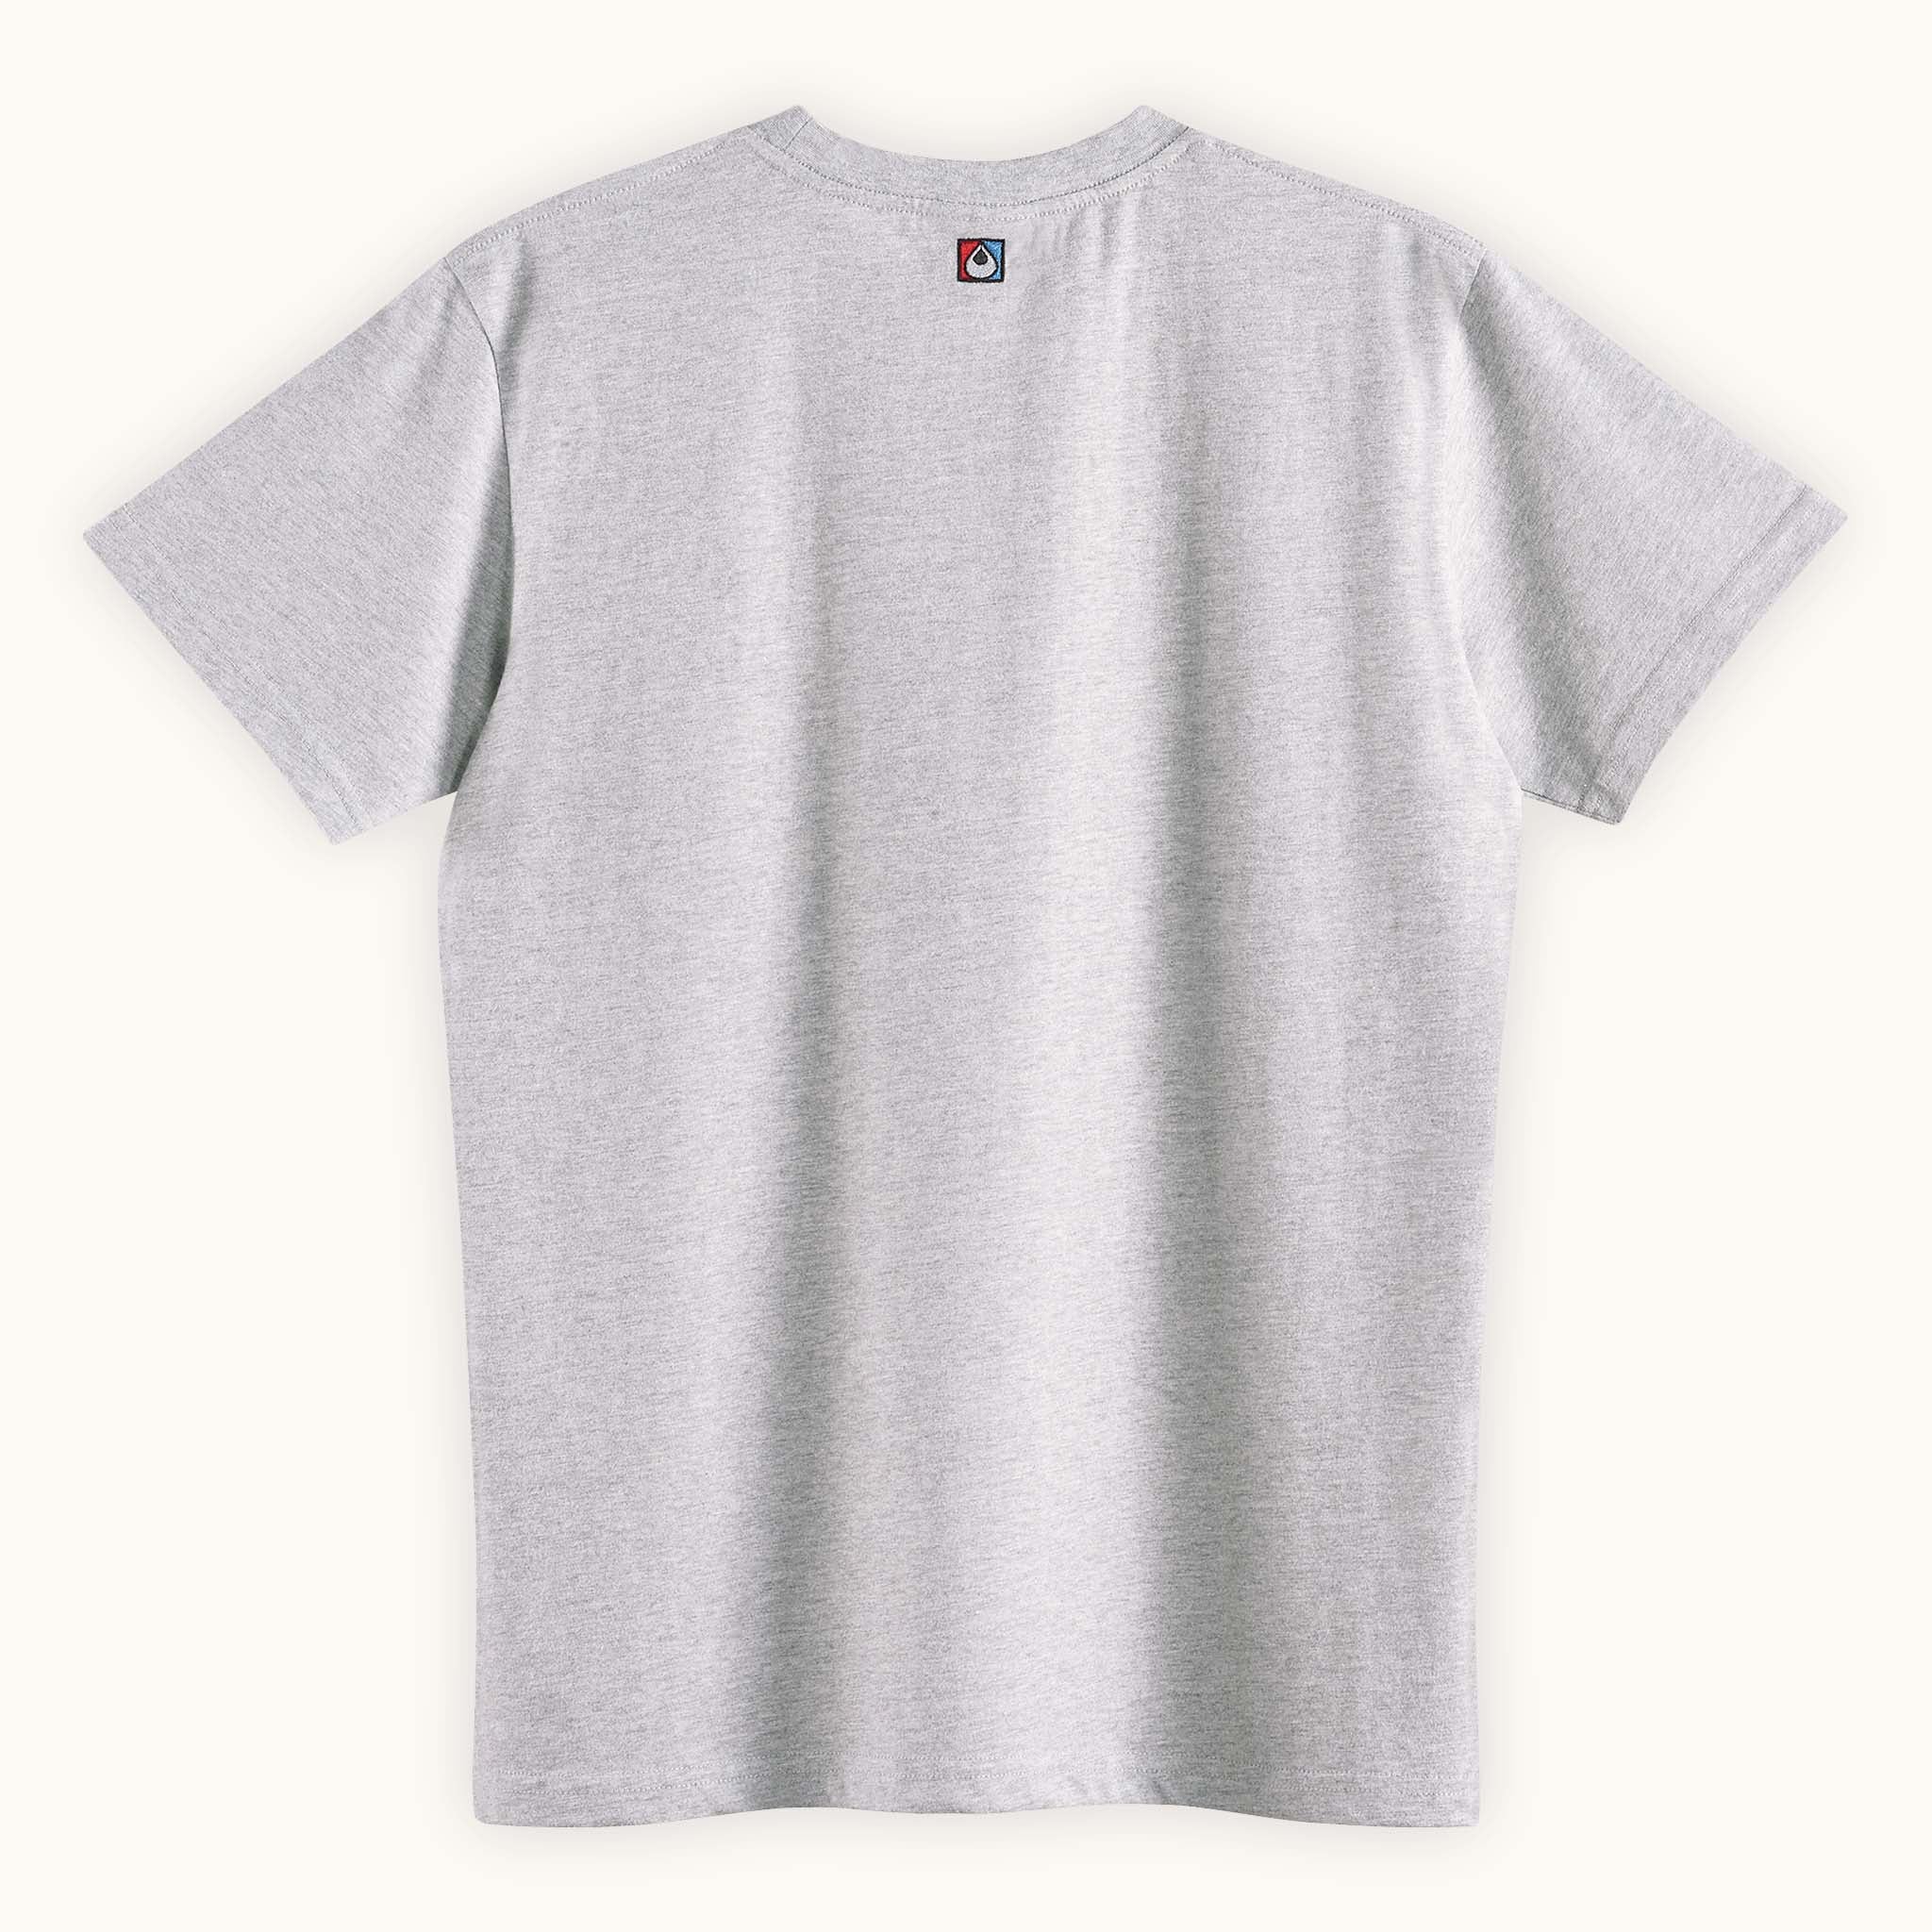 mens grey t-shirt